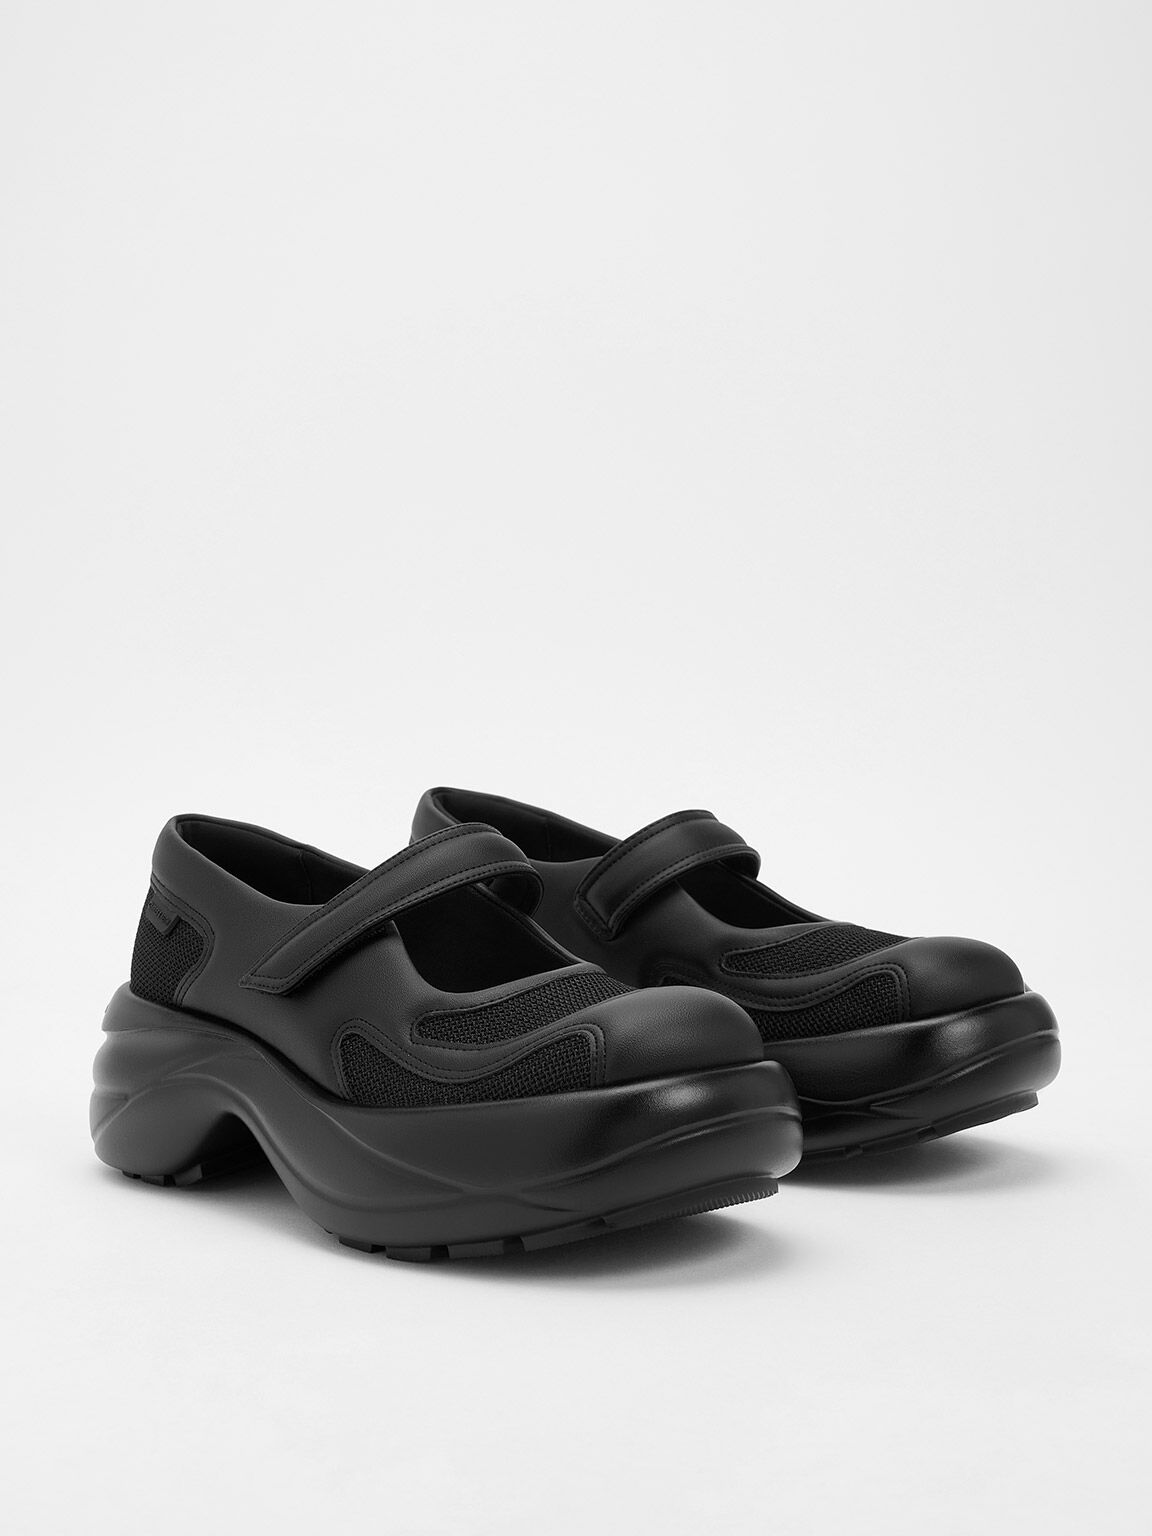 Sneakers Mary Jane Curved Platform Mesh, Black Textured, hi-res